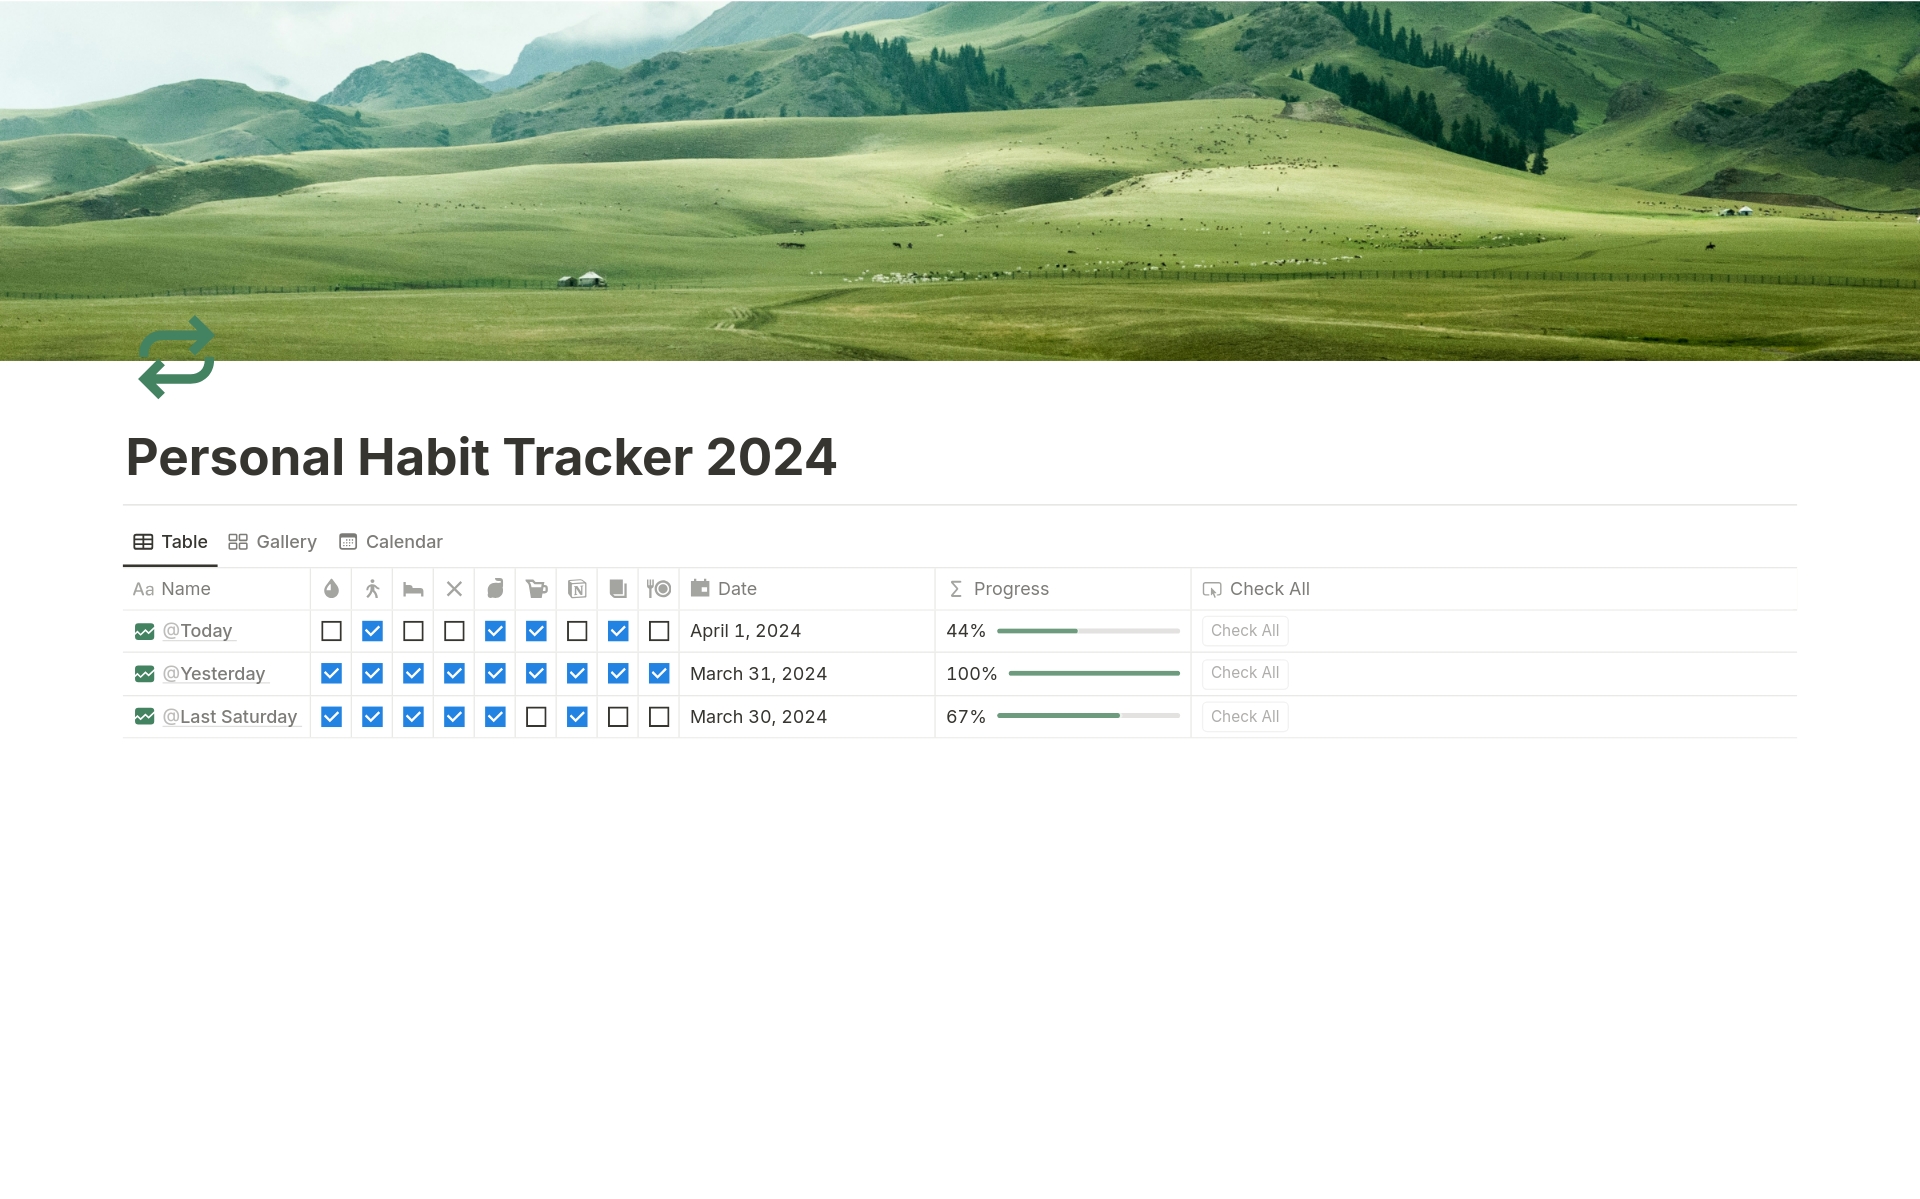 Vista previa de plantilla para Personal Habit Tracker 2024